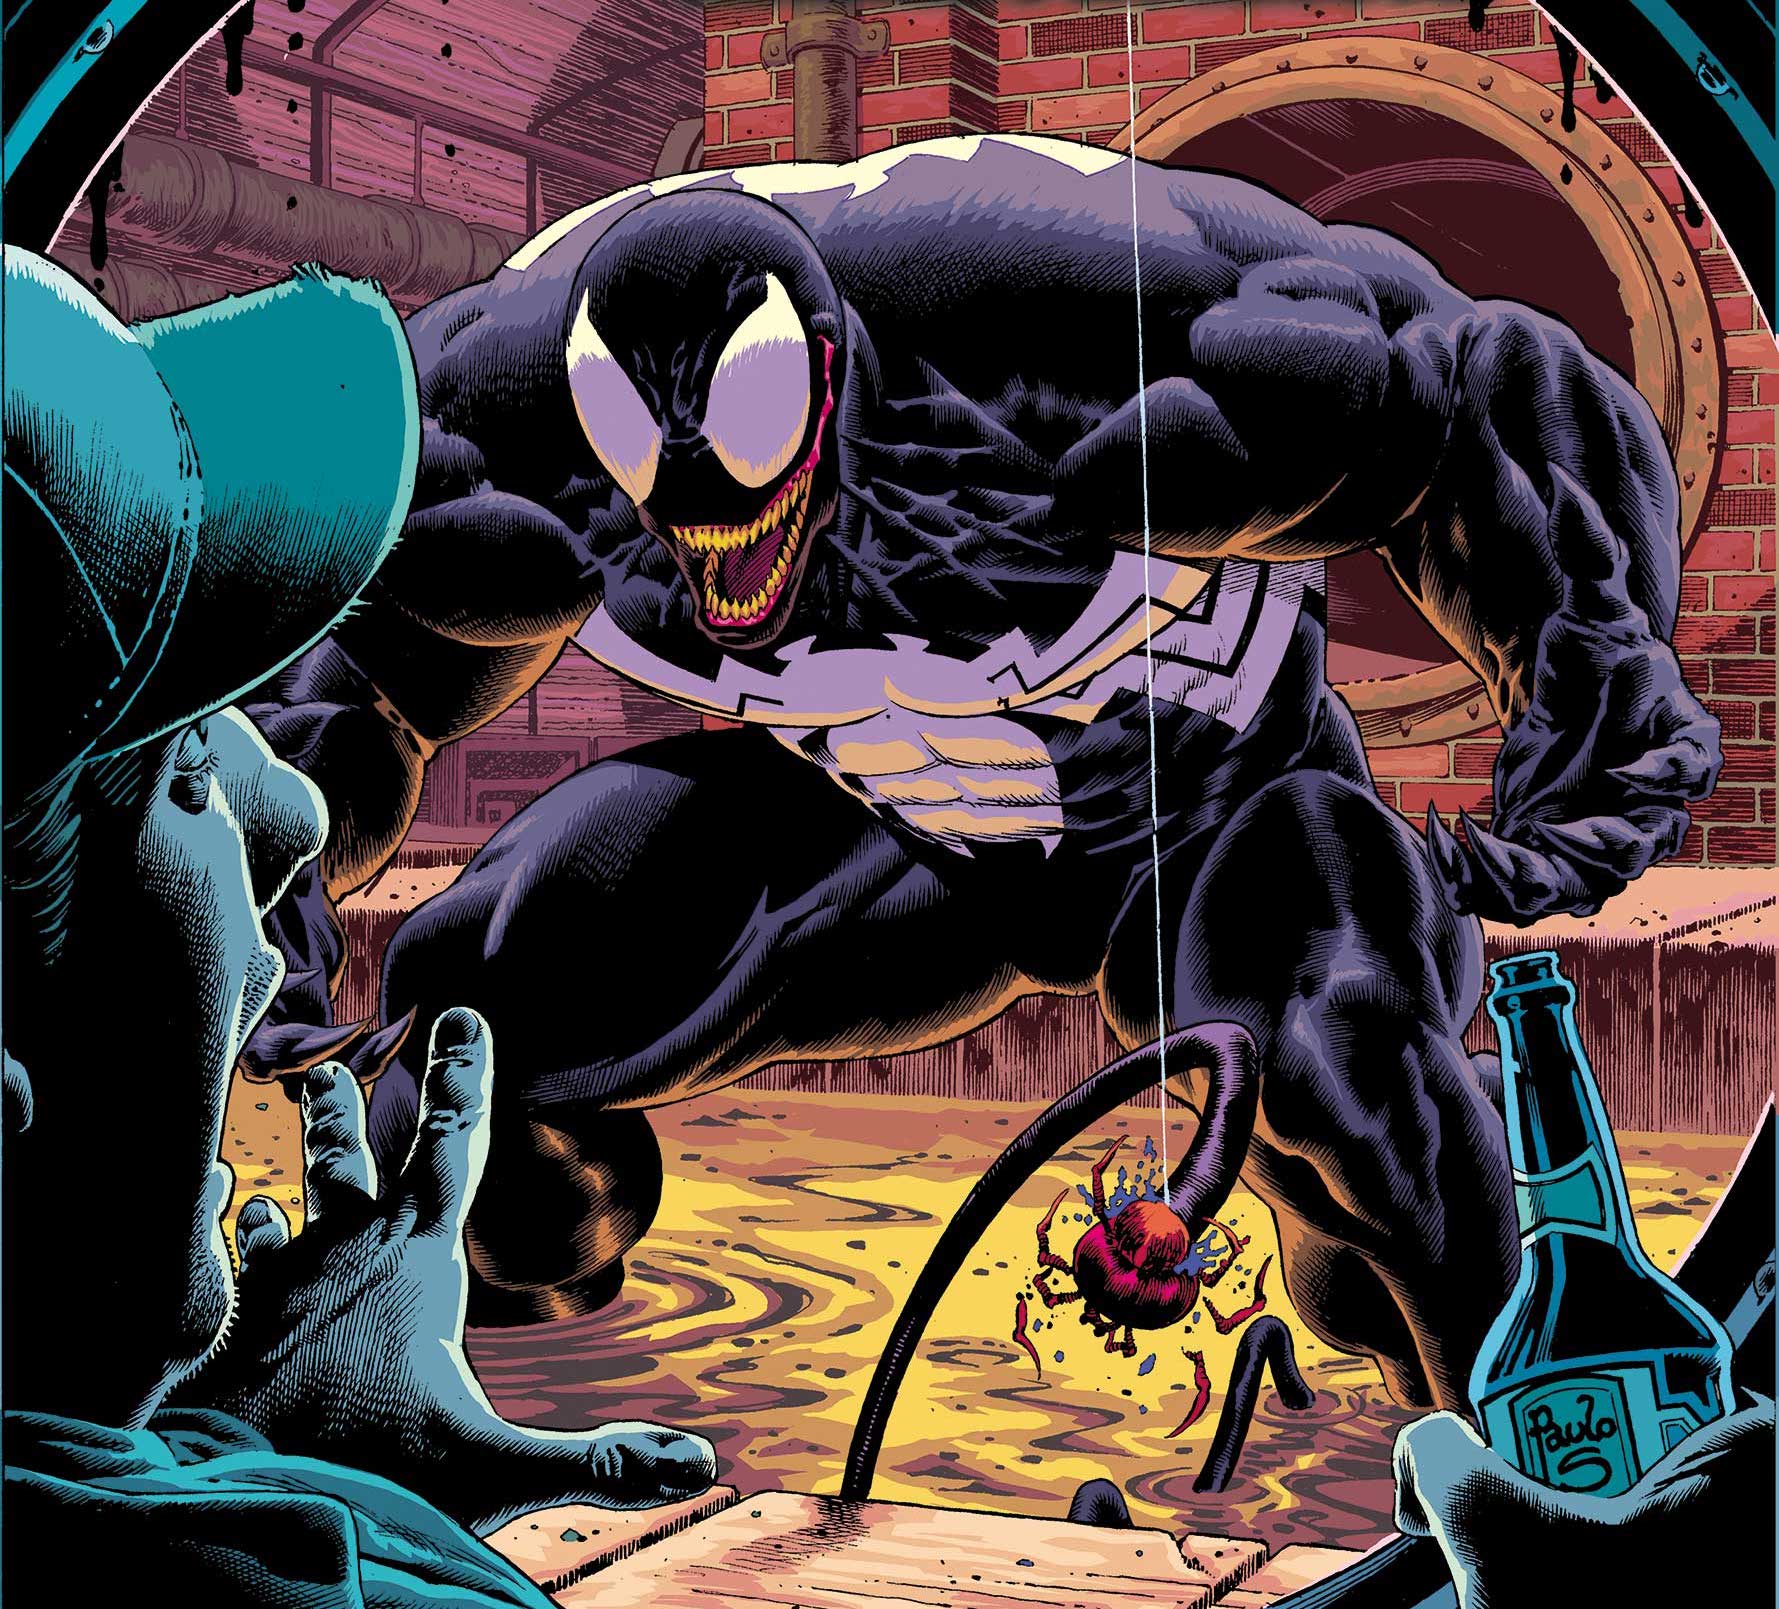 David Michelinie returns to Venom with 'Venom: Lethal Protector' #1